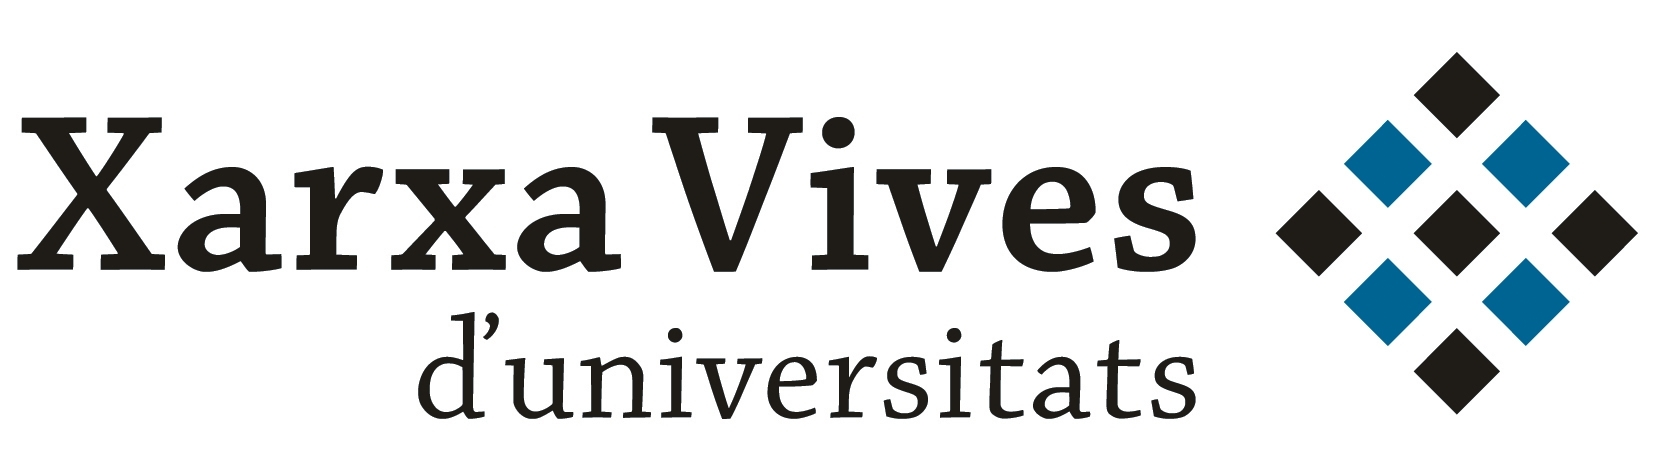 Vives Network of Universities